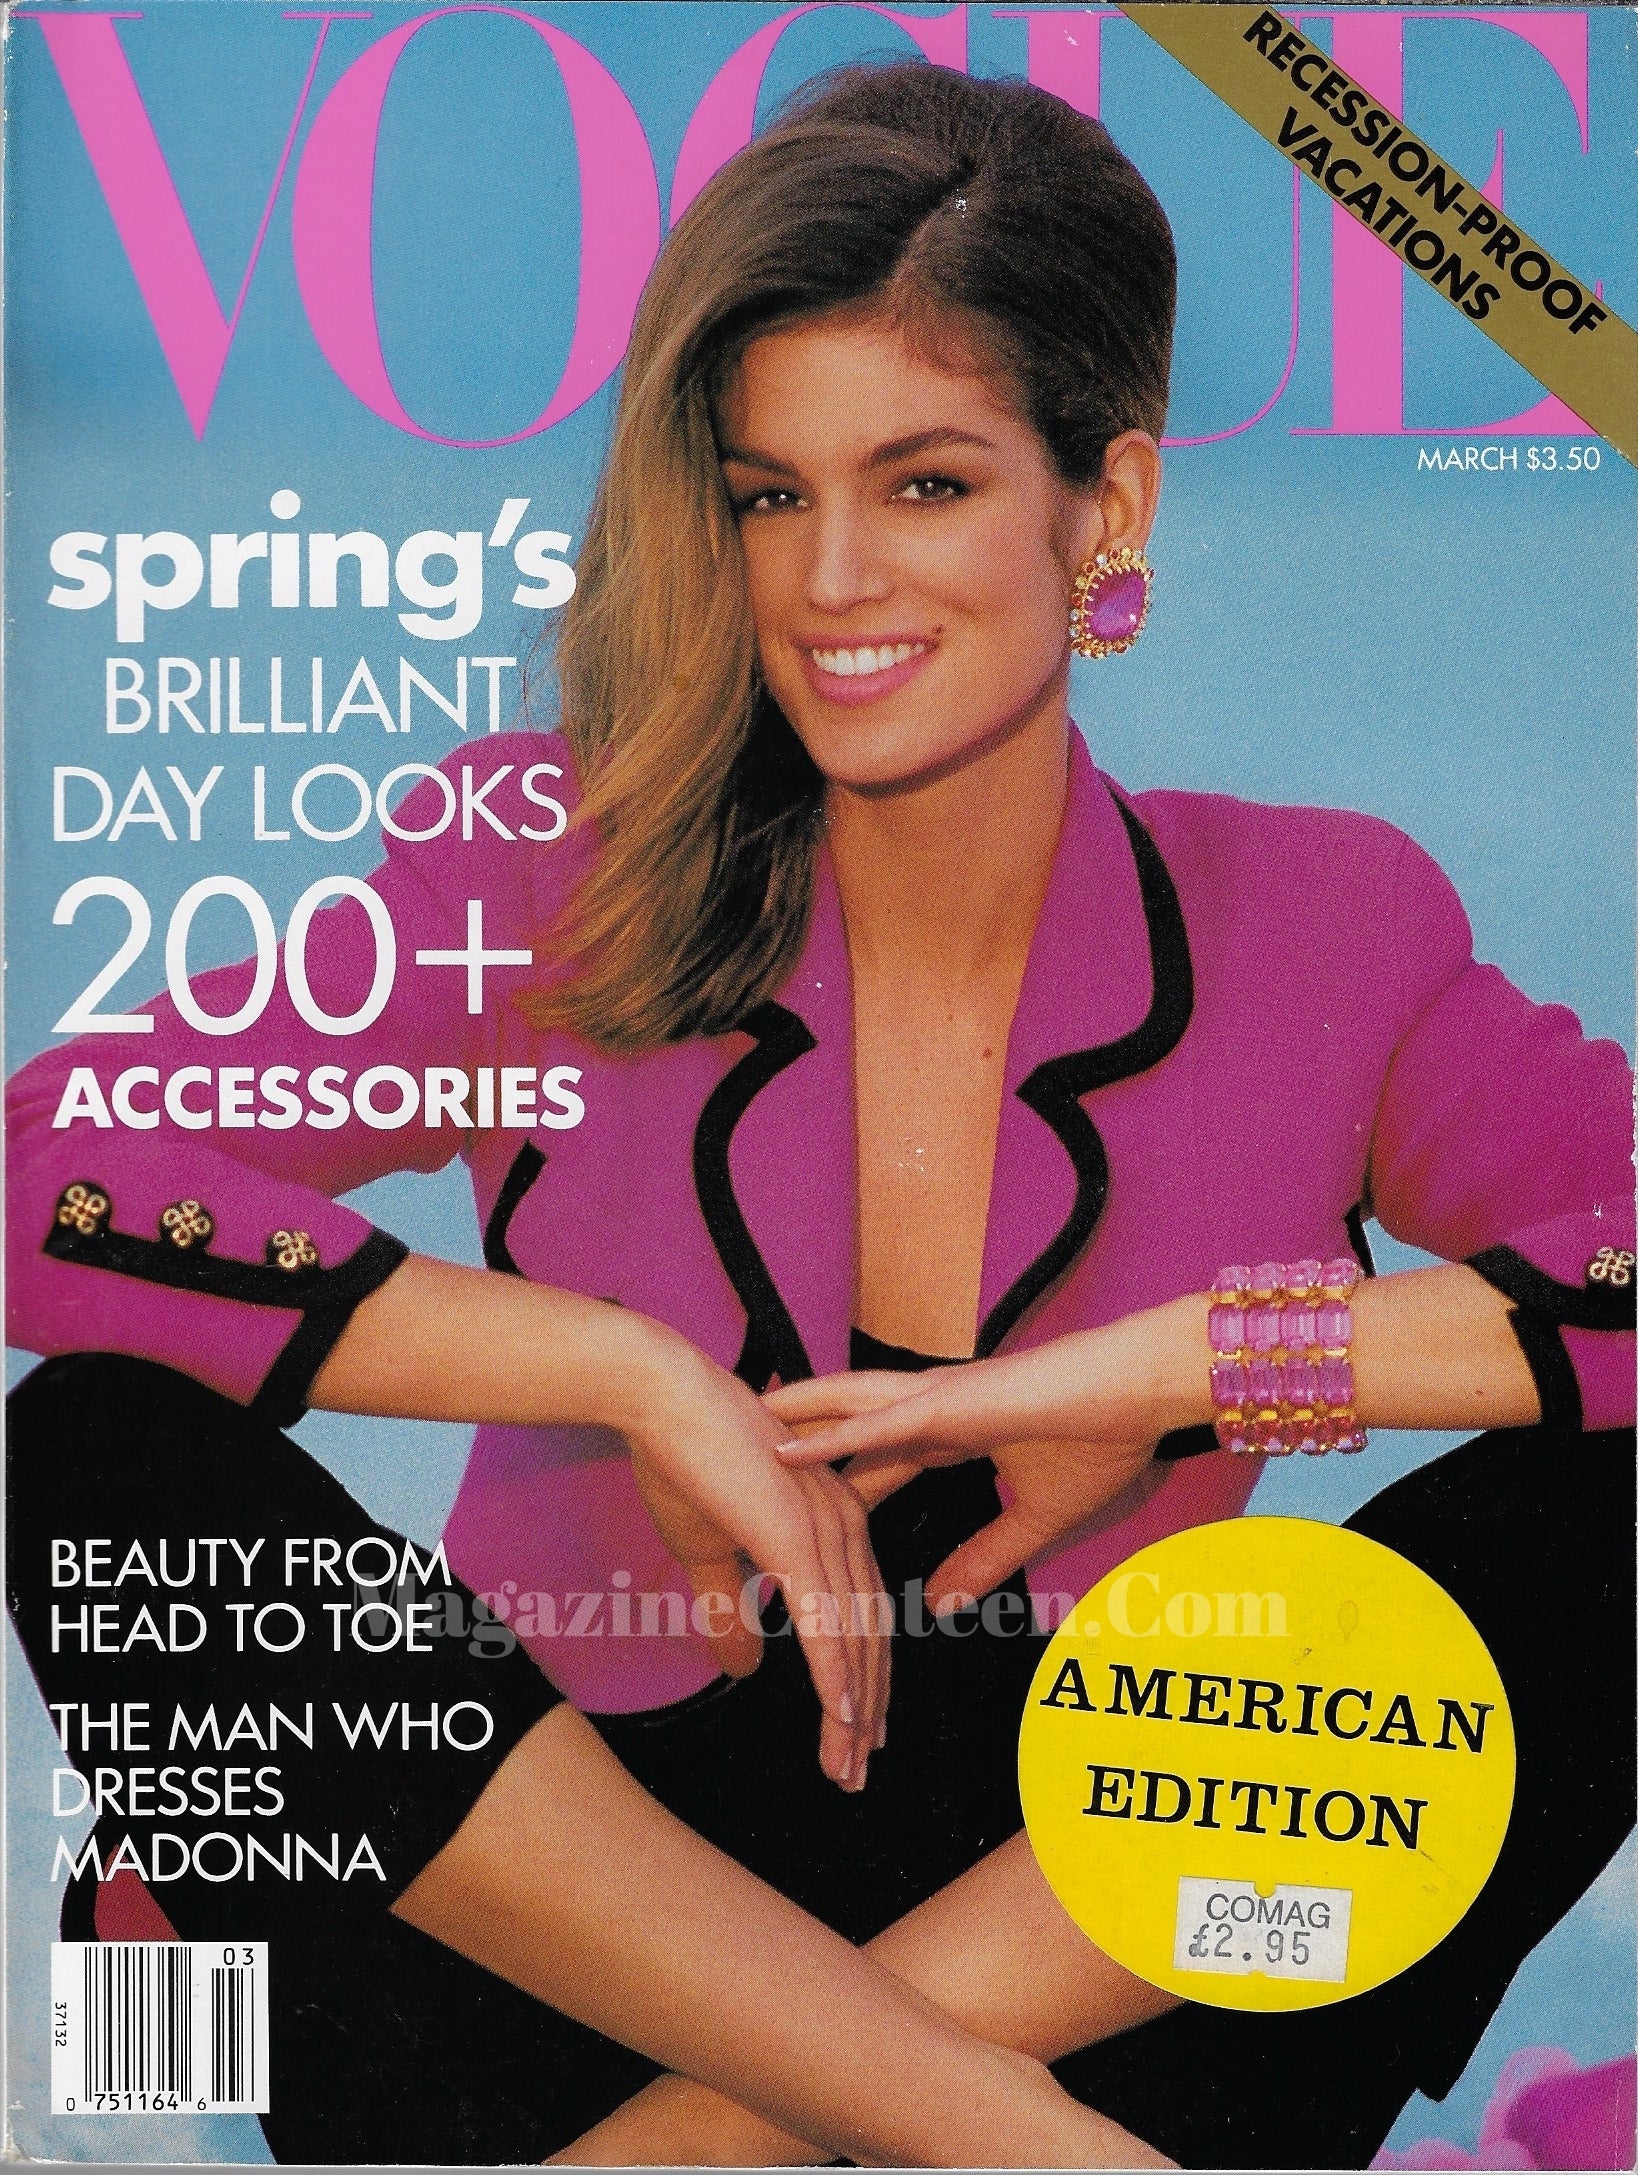 Vogue USA Magazine March 1991 - Cindy Crawford